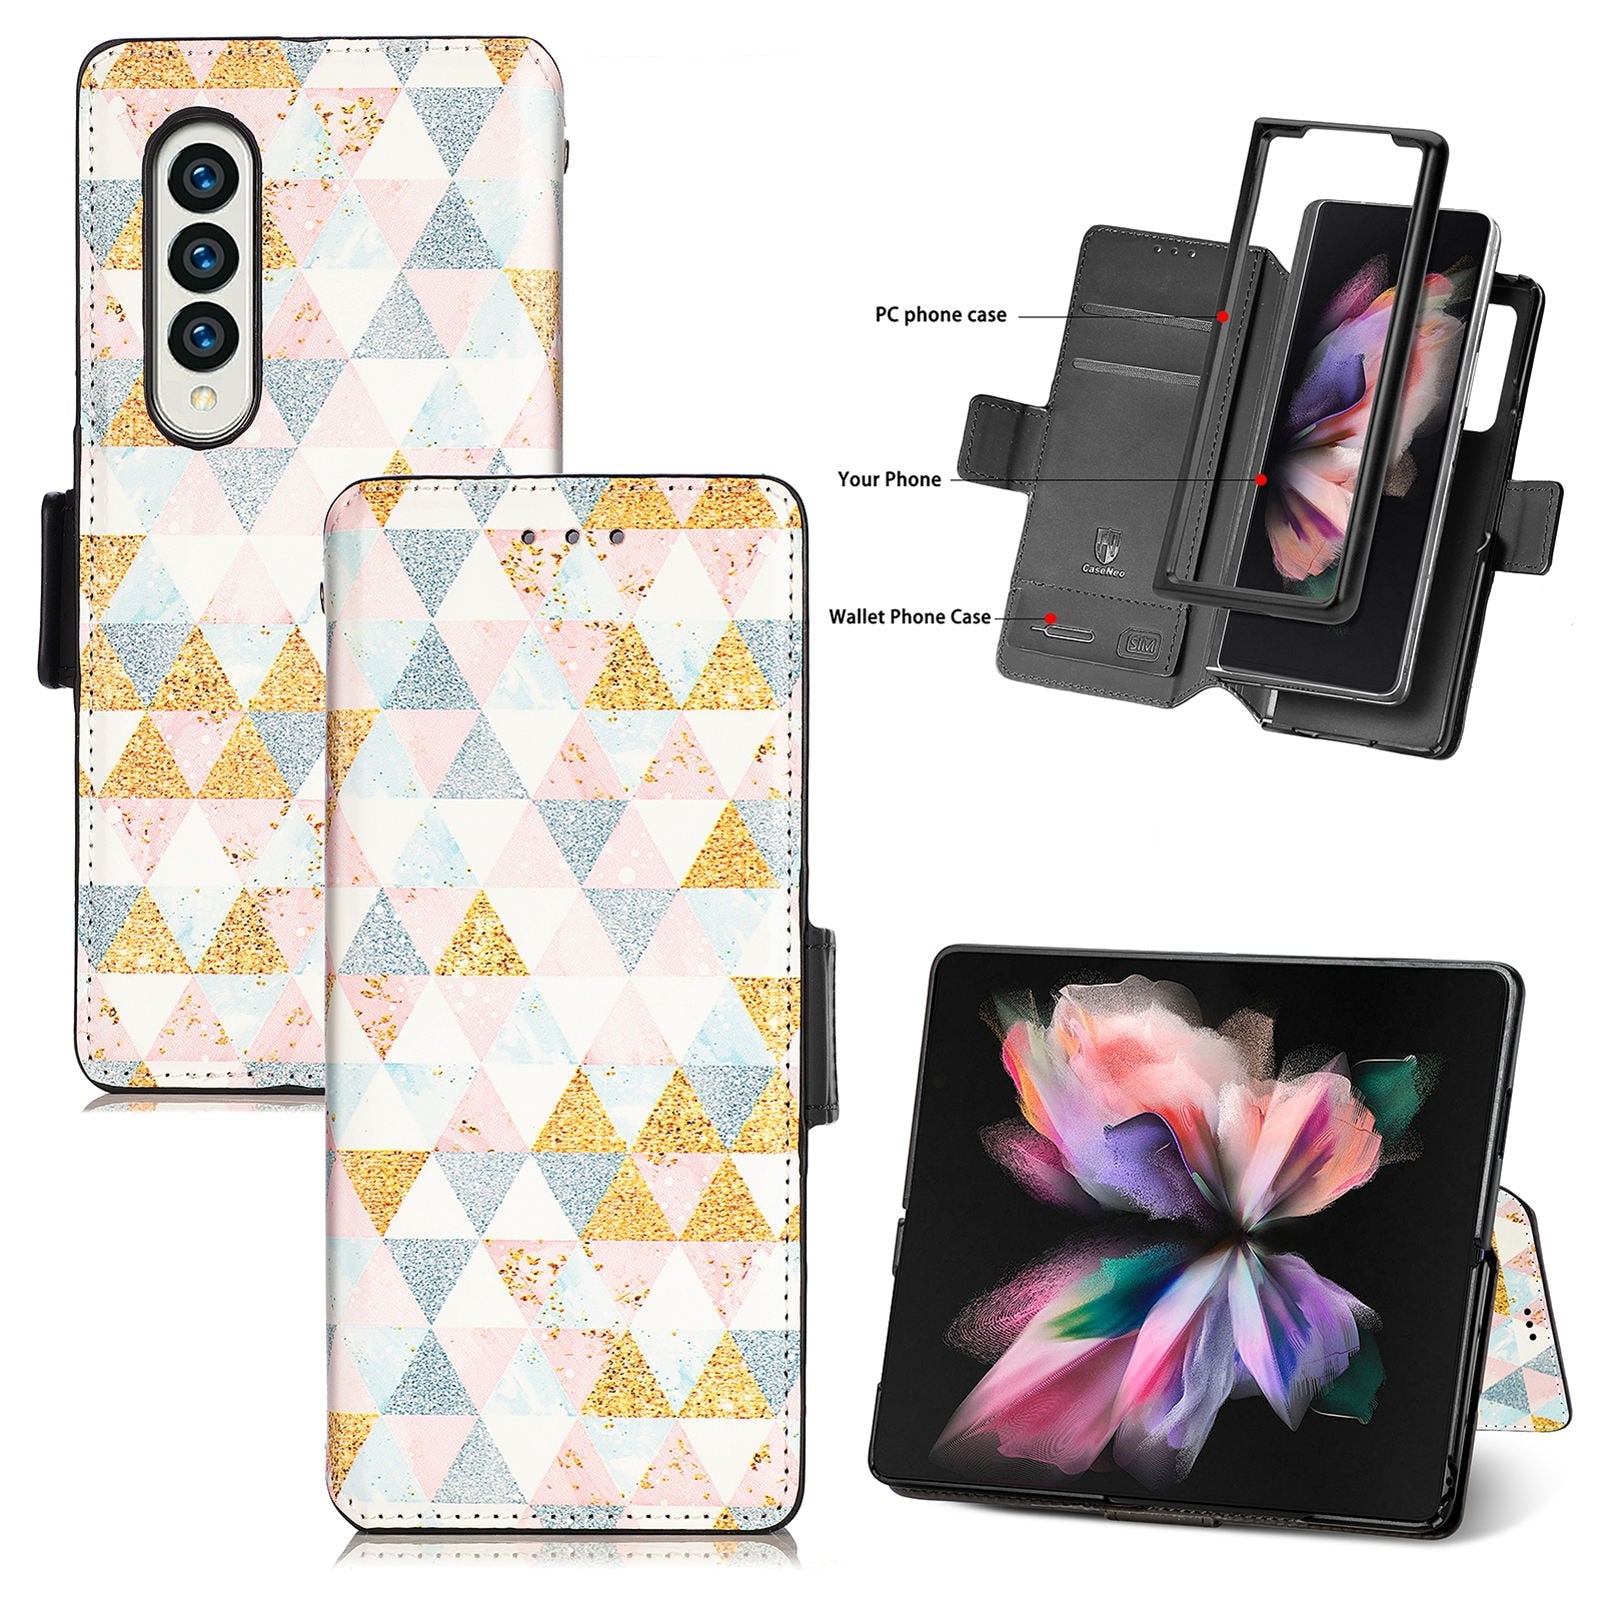 Samsung Galaxy Z Fold 3 Case - Samsung Galaxy Z Fold 3 Case, Wallet Case PU Leather